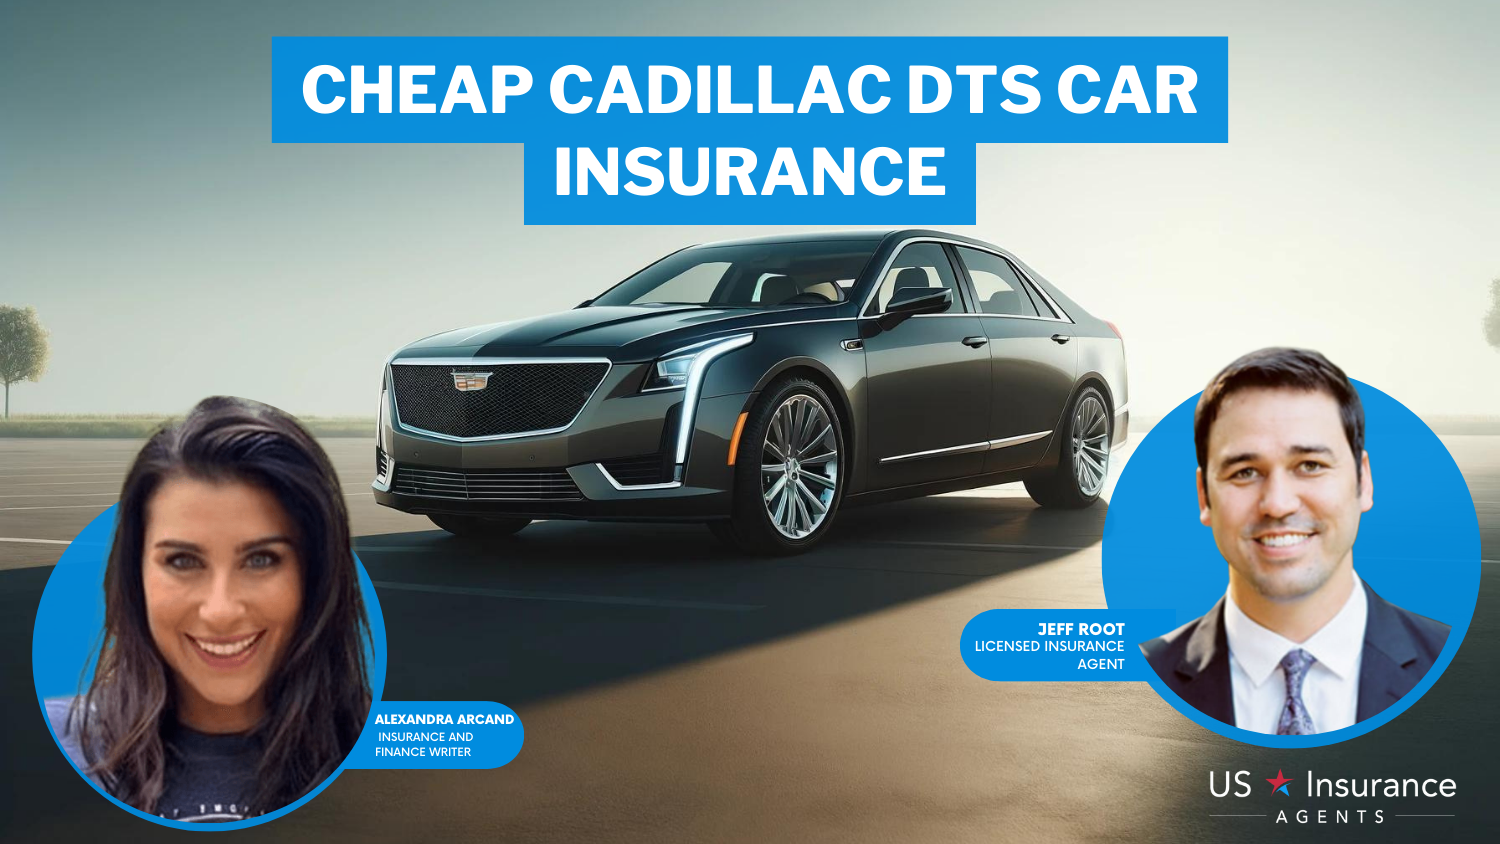 Cheap Cadillac DTS Car Insurance: Erie, Progressive, and State Farm